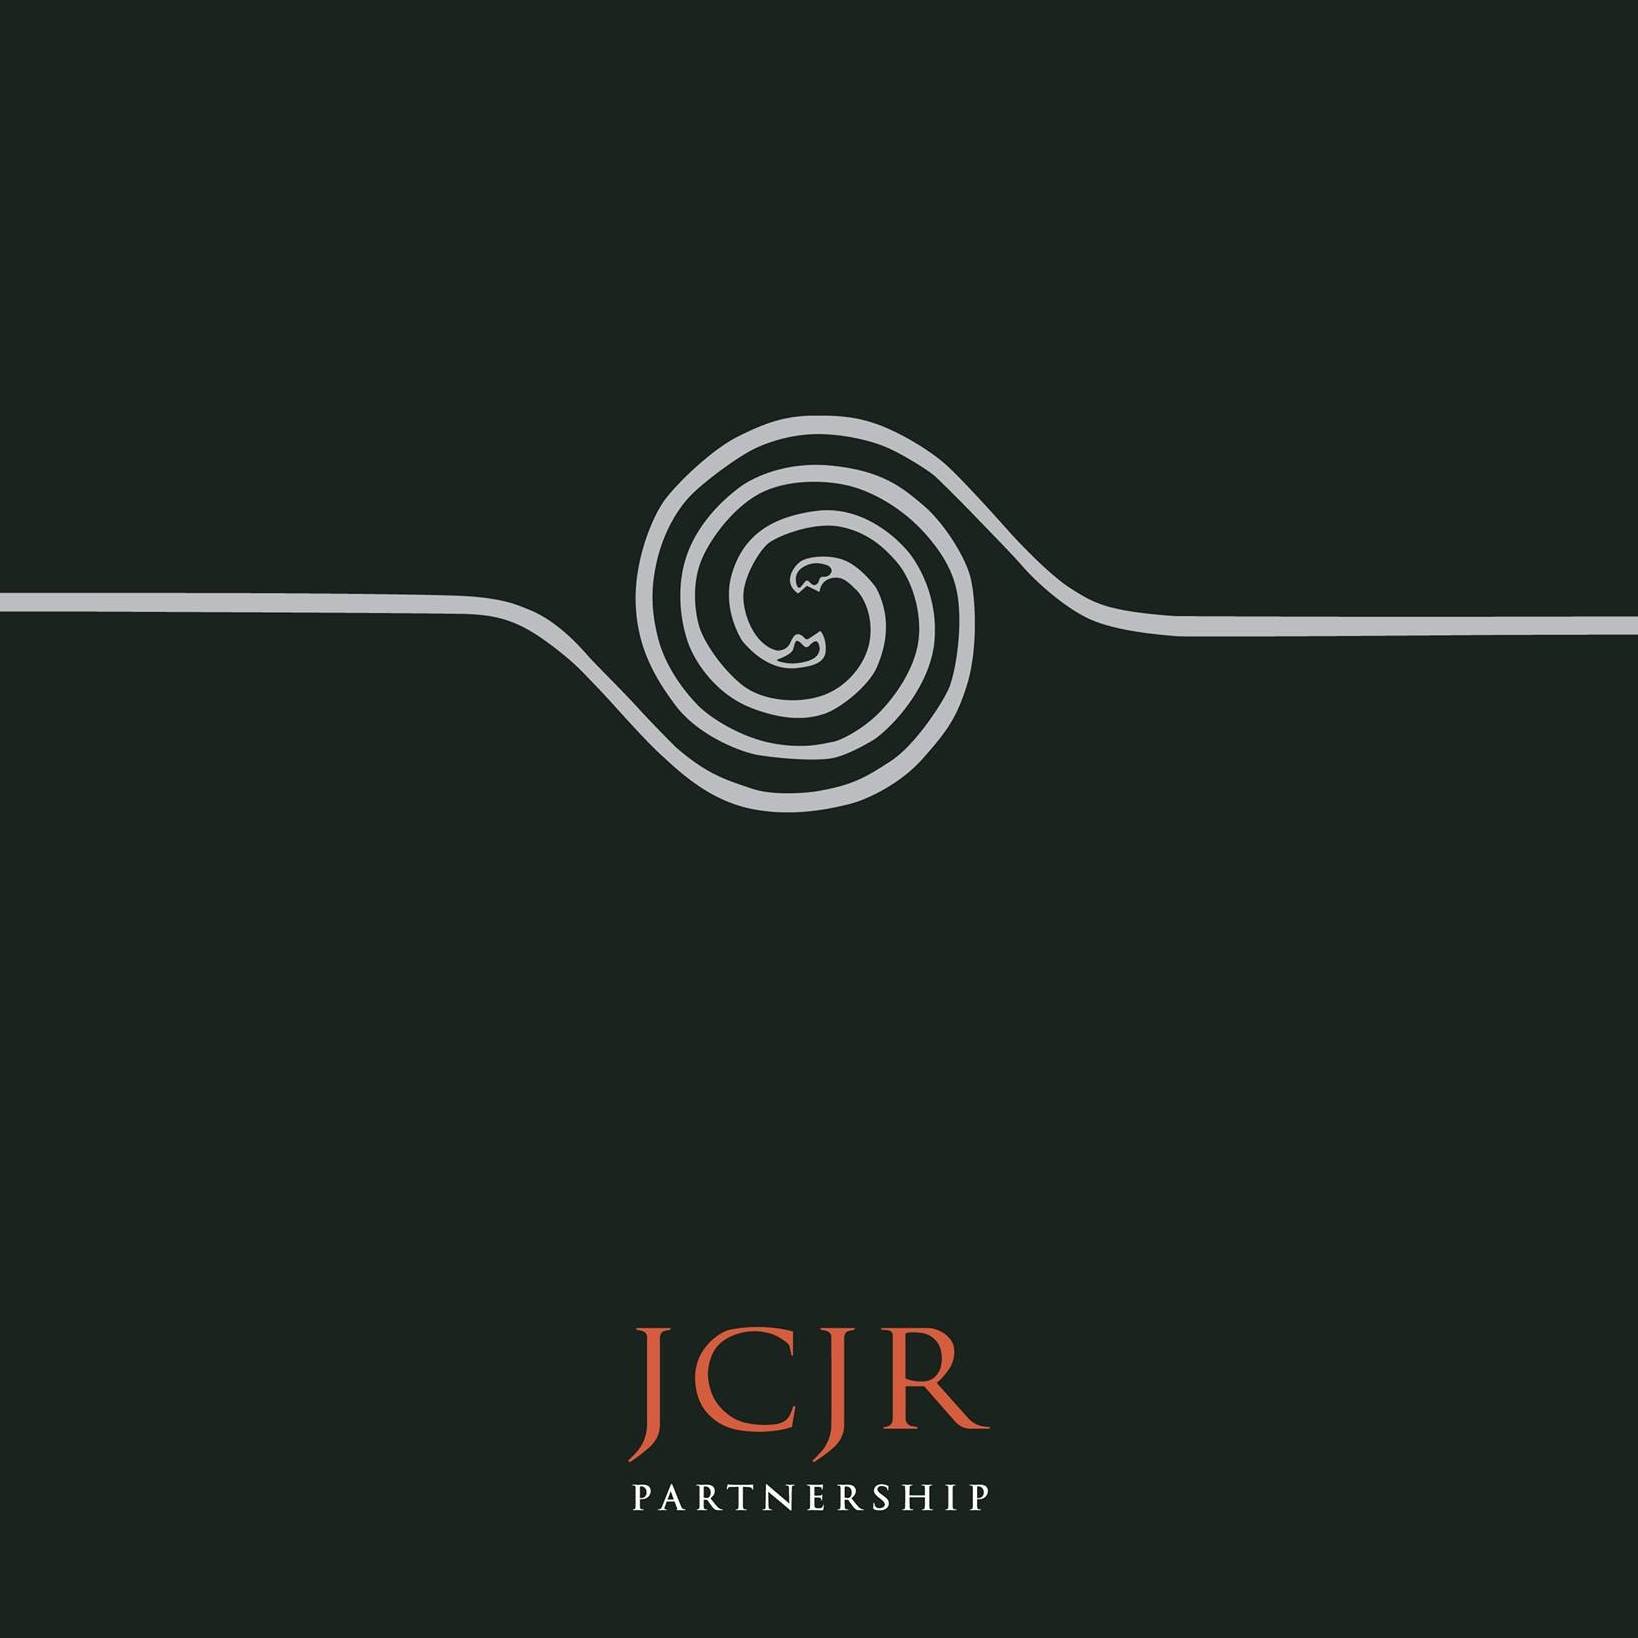 JCJR Partnership Logo